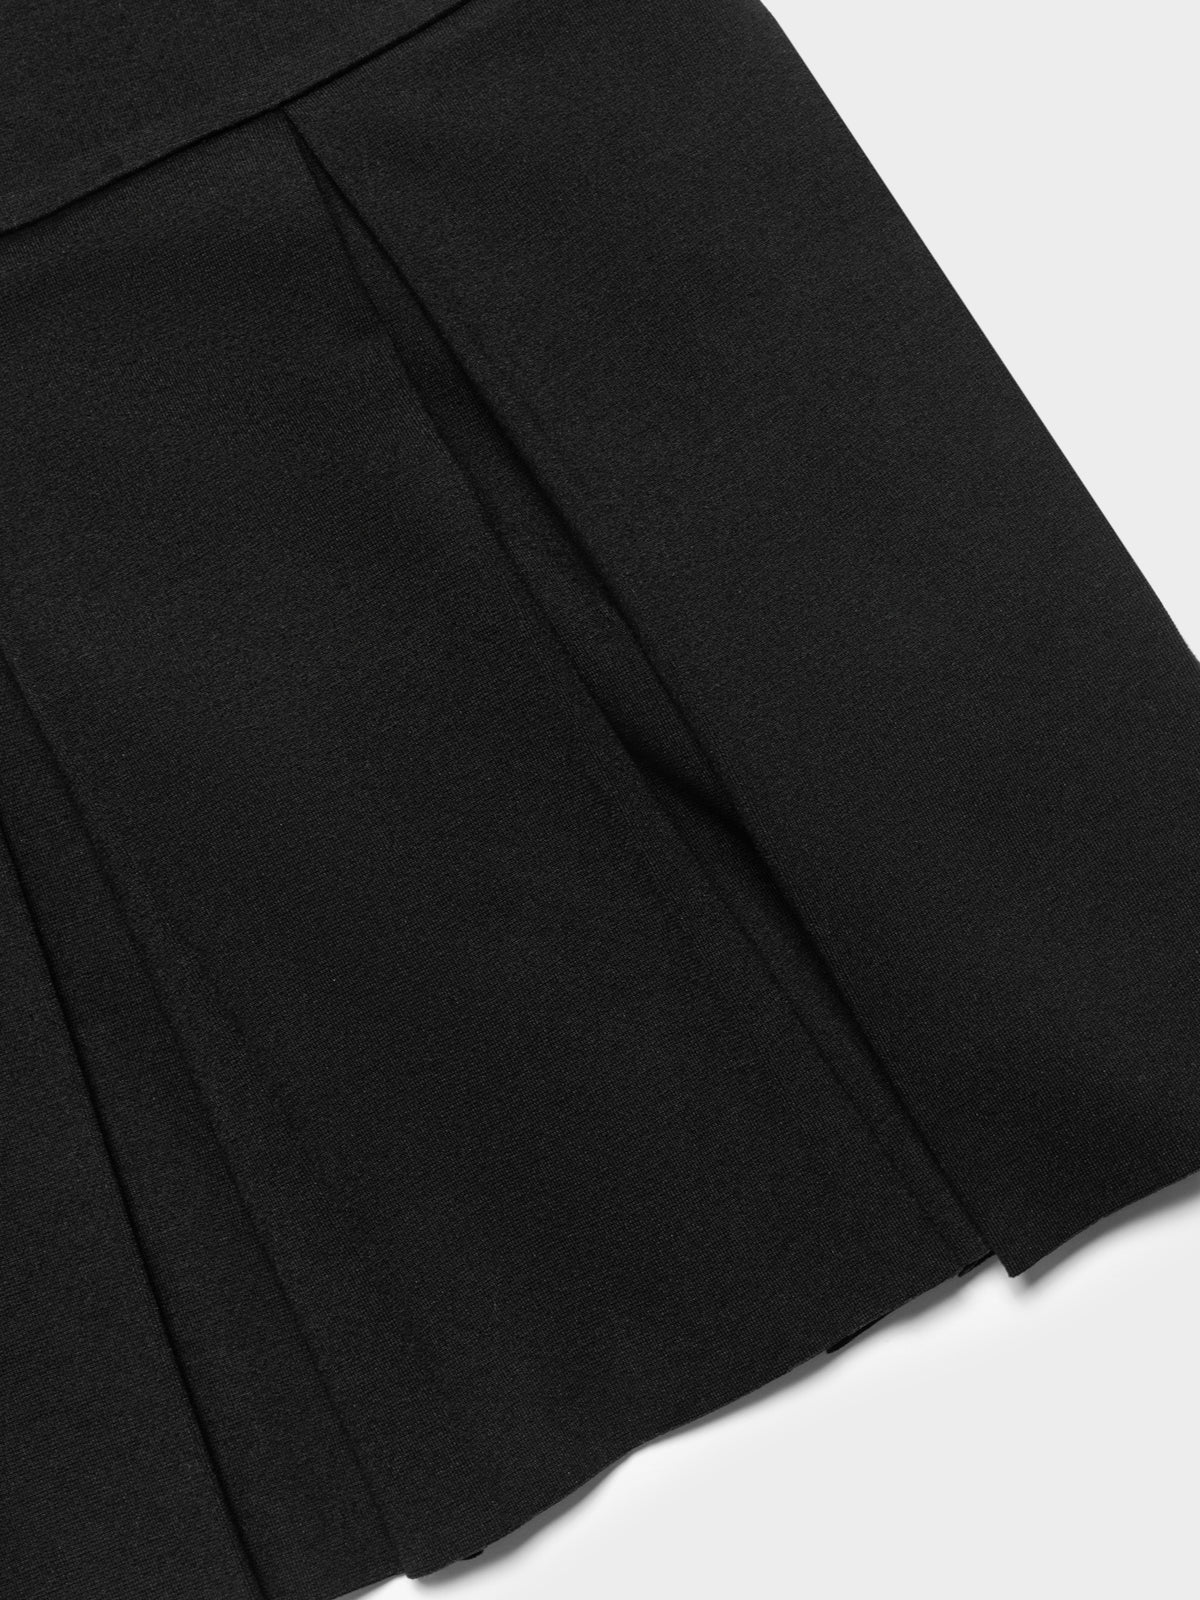 Heather Pleated Mini Skirt in Black